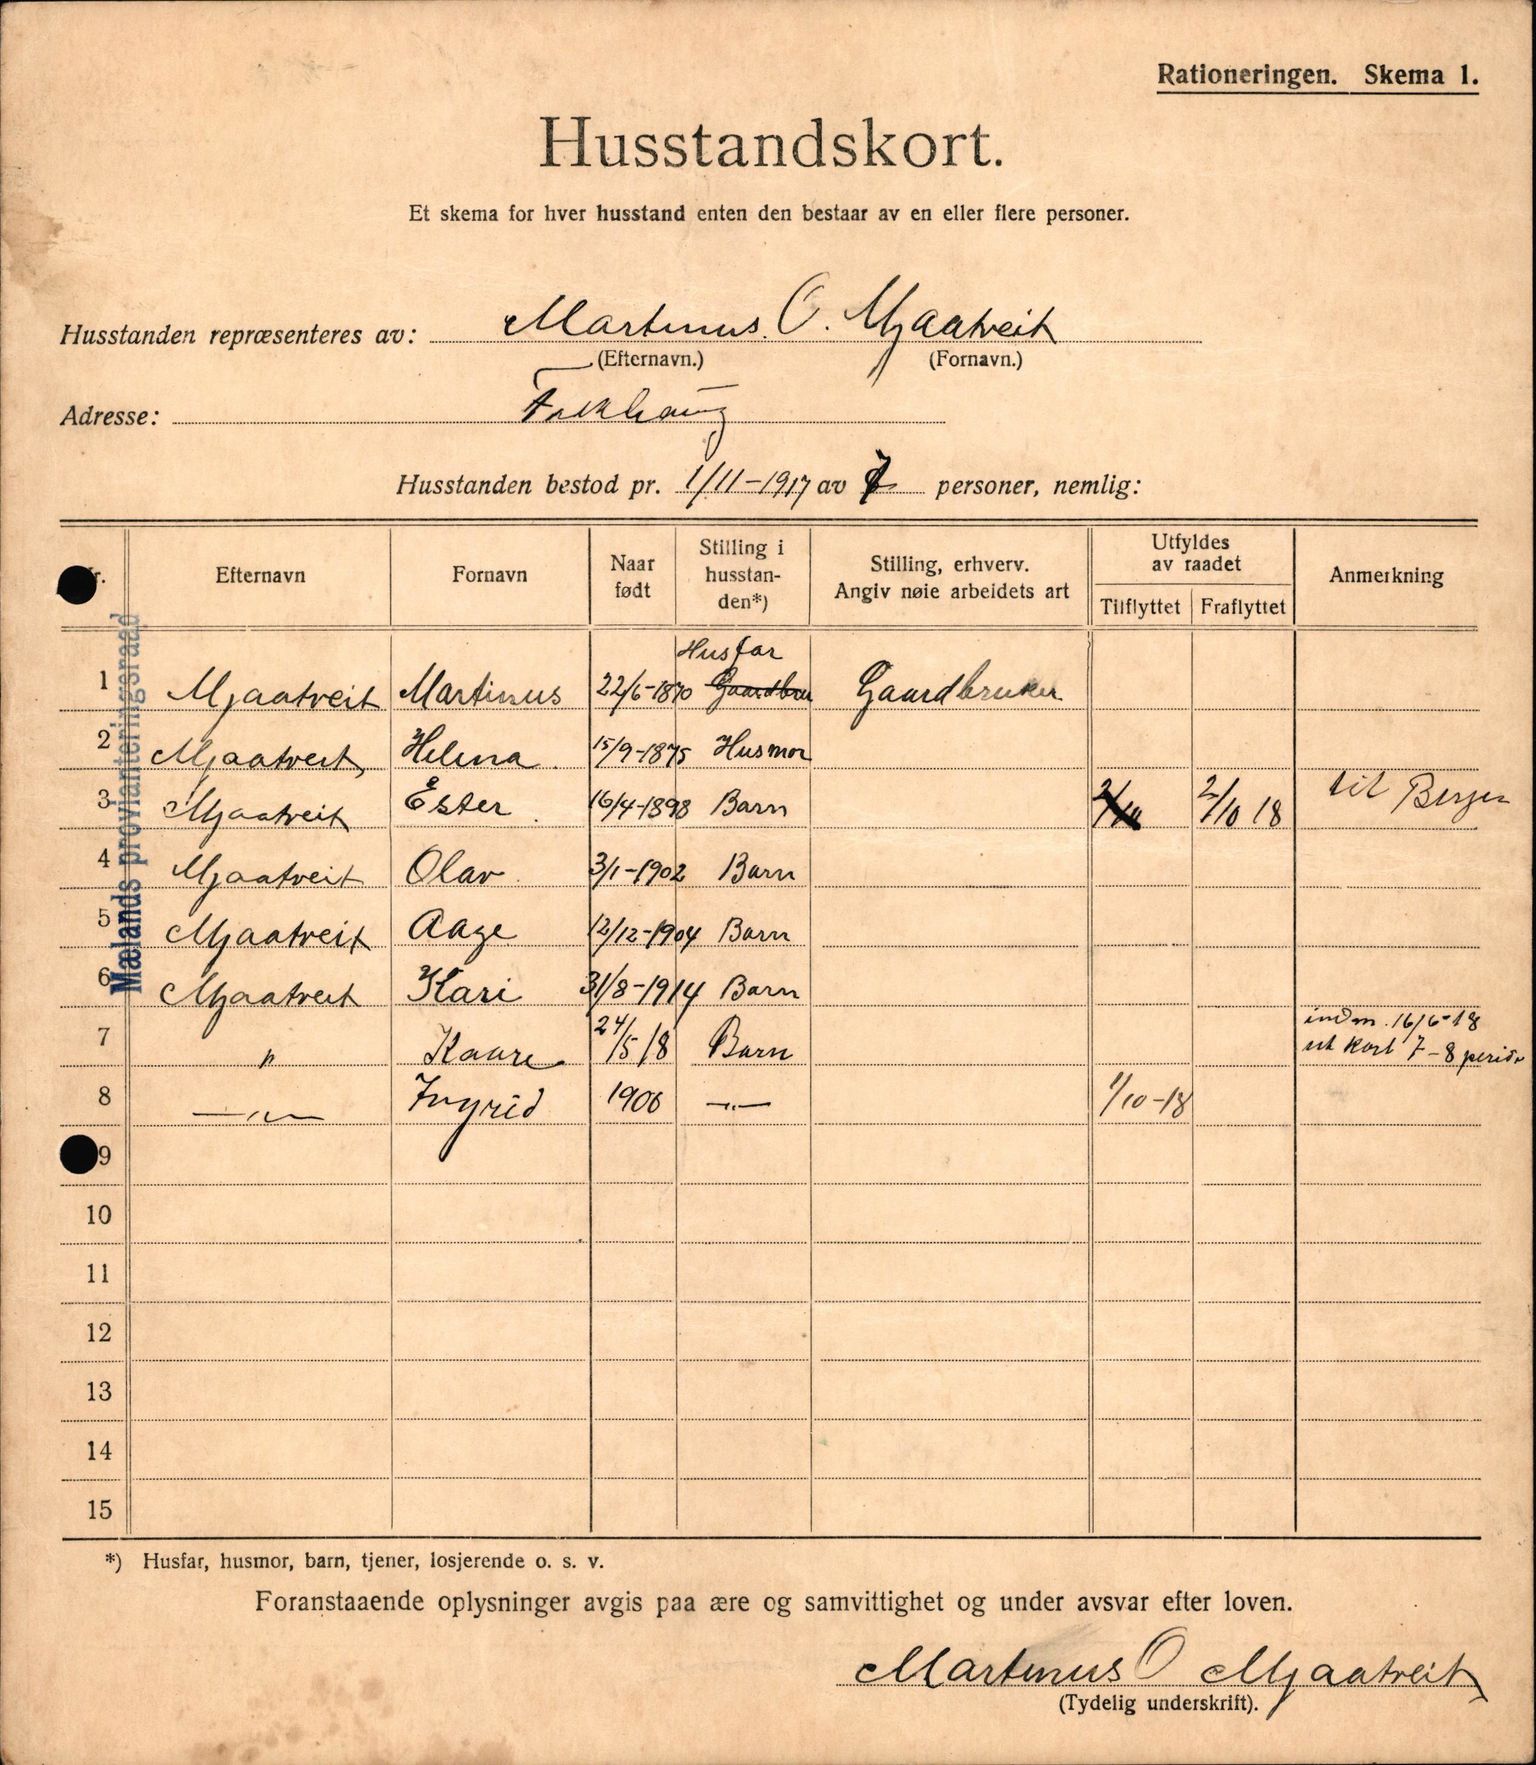 IKAH, Meland kommune, Provianteringsrådet, Husstander per 01.11.1917, 1917-1918, s. 244